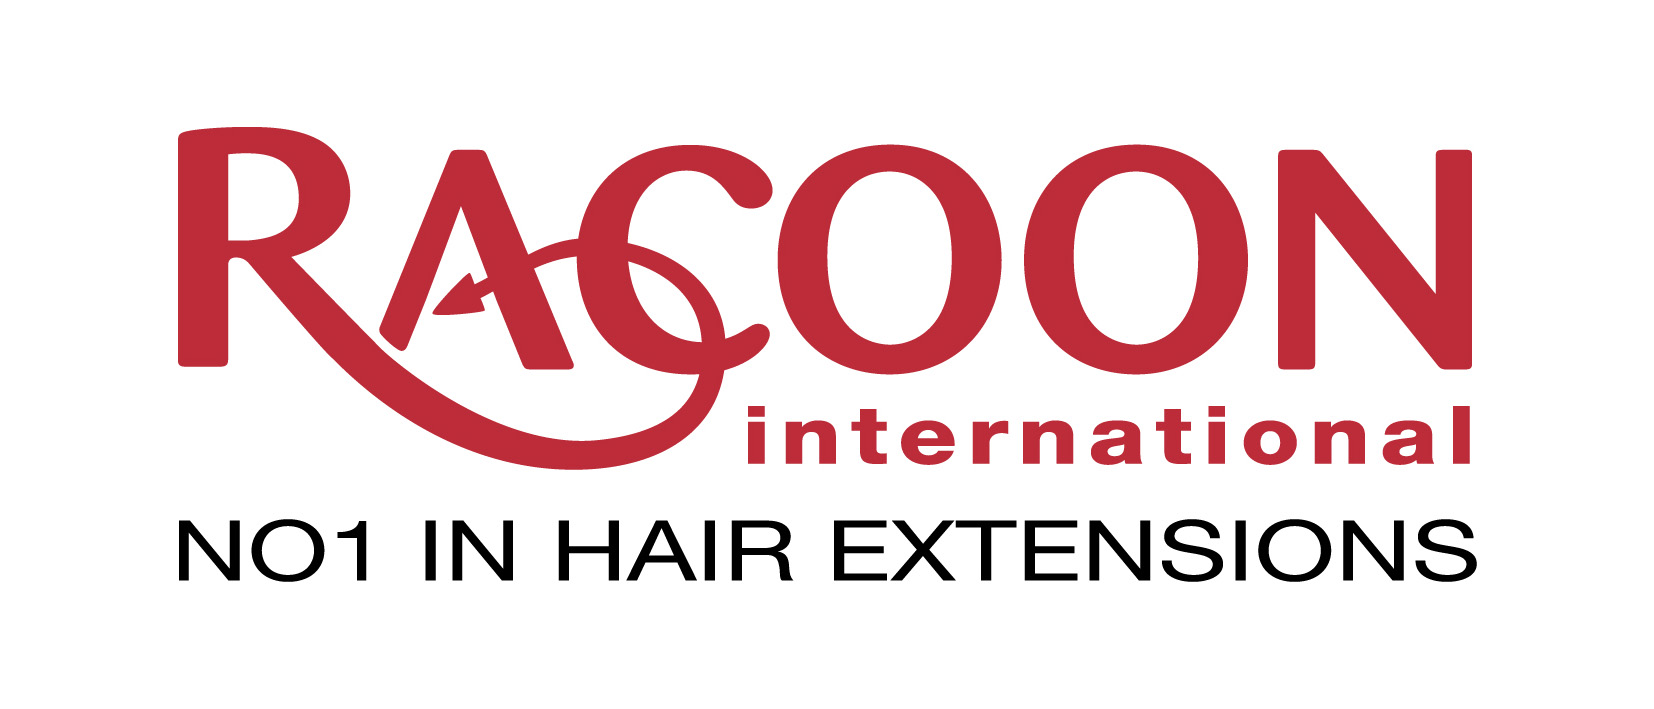 Extension Logo photo - 1